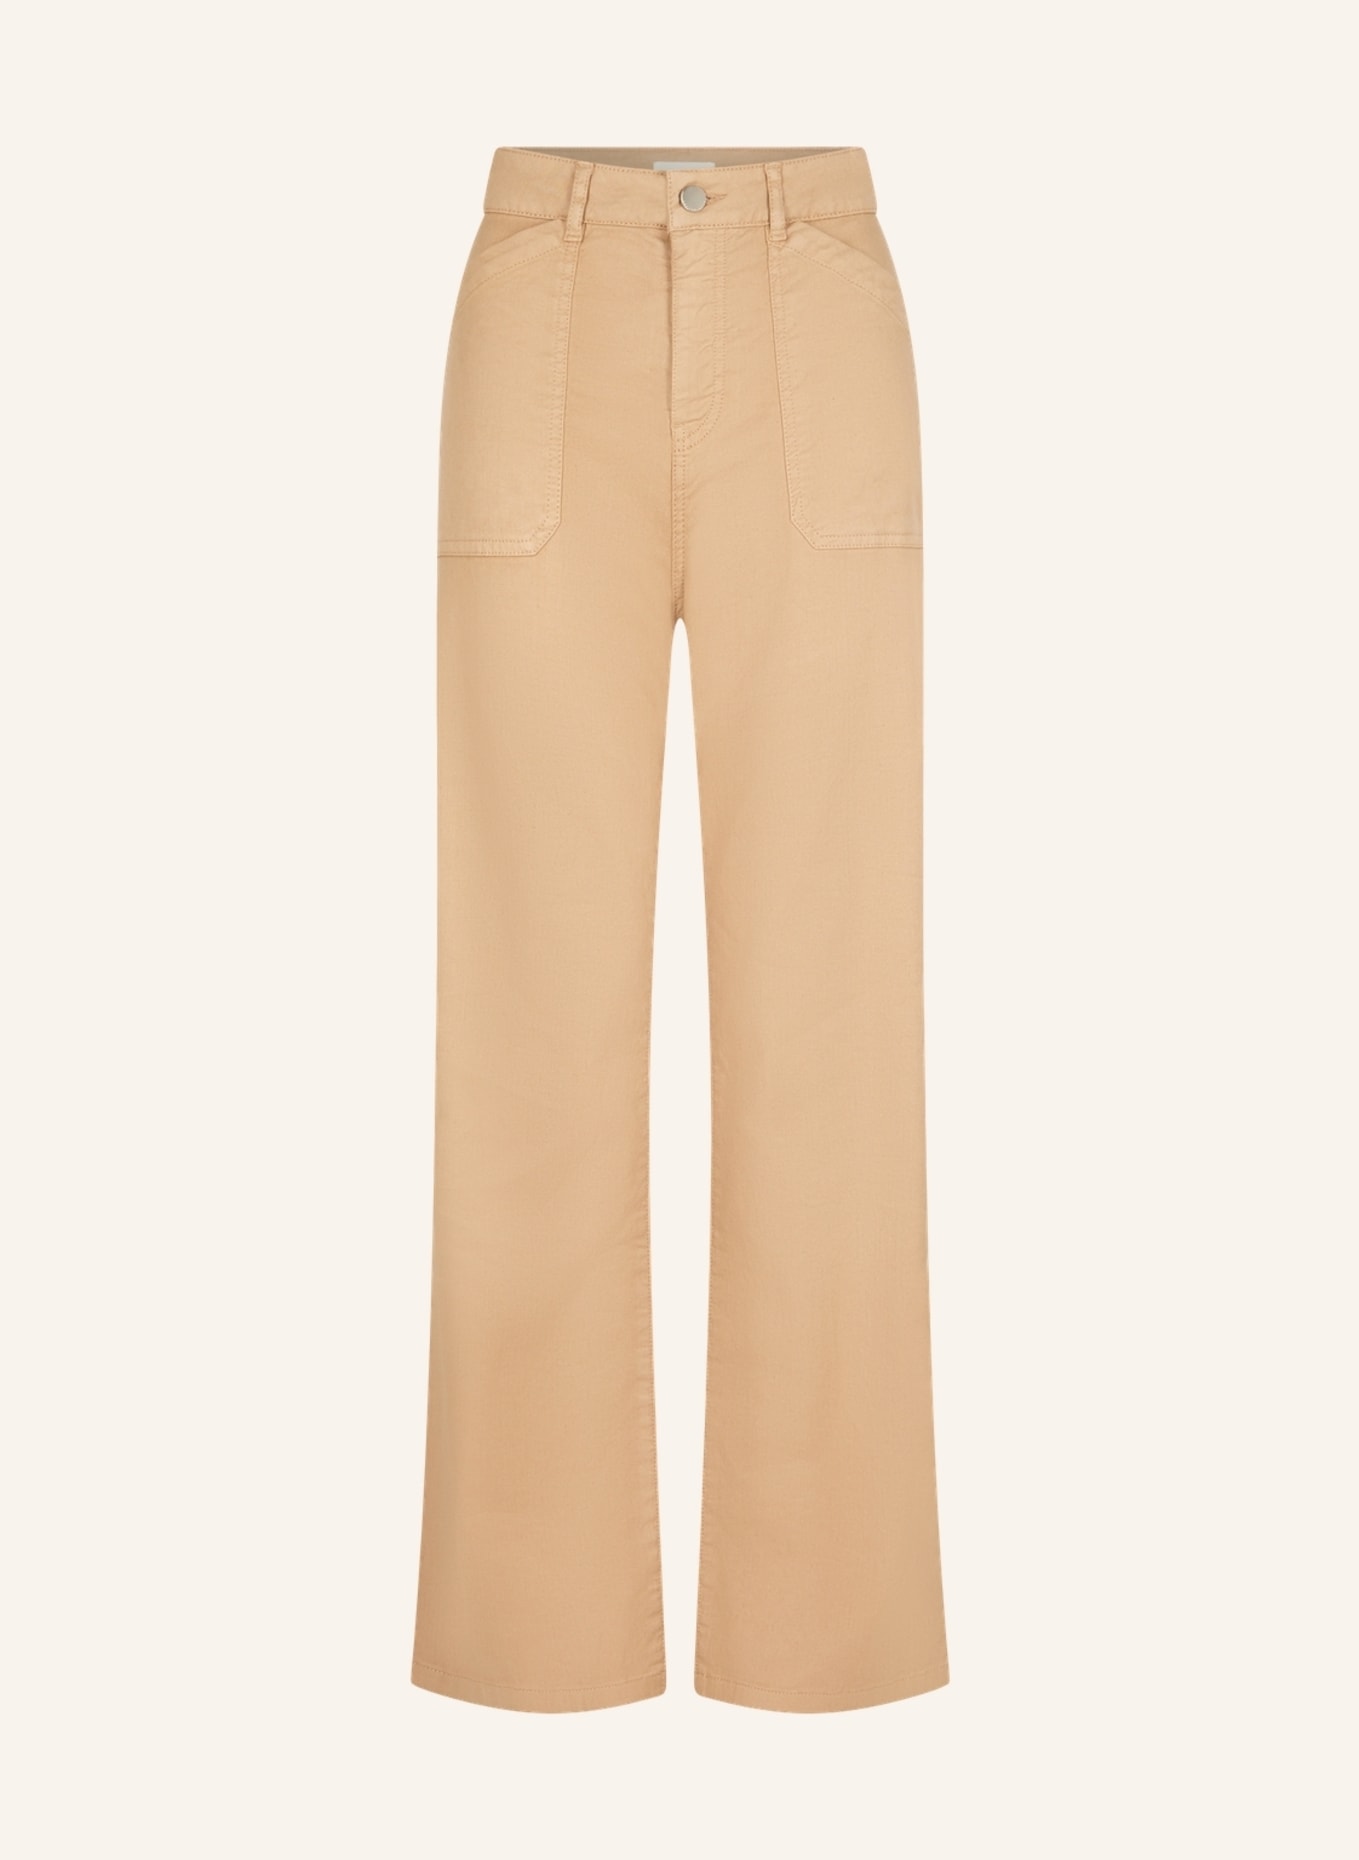 GERARD DAREL Jeans CARANCE, Farbe: BEIGE (Bild 1)